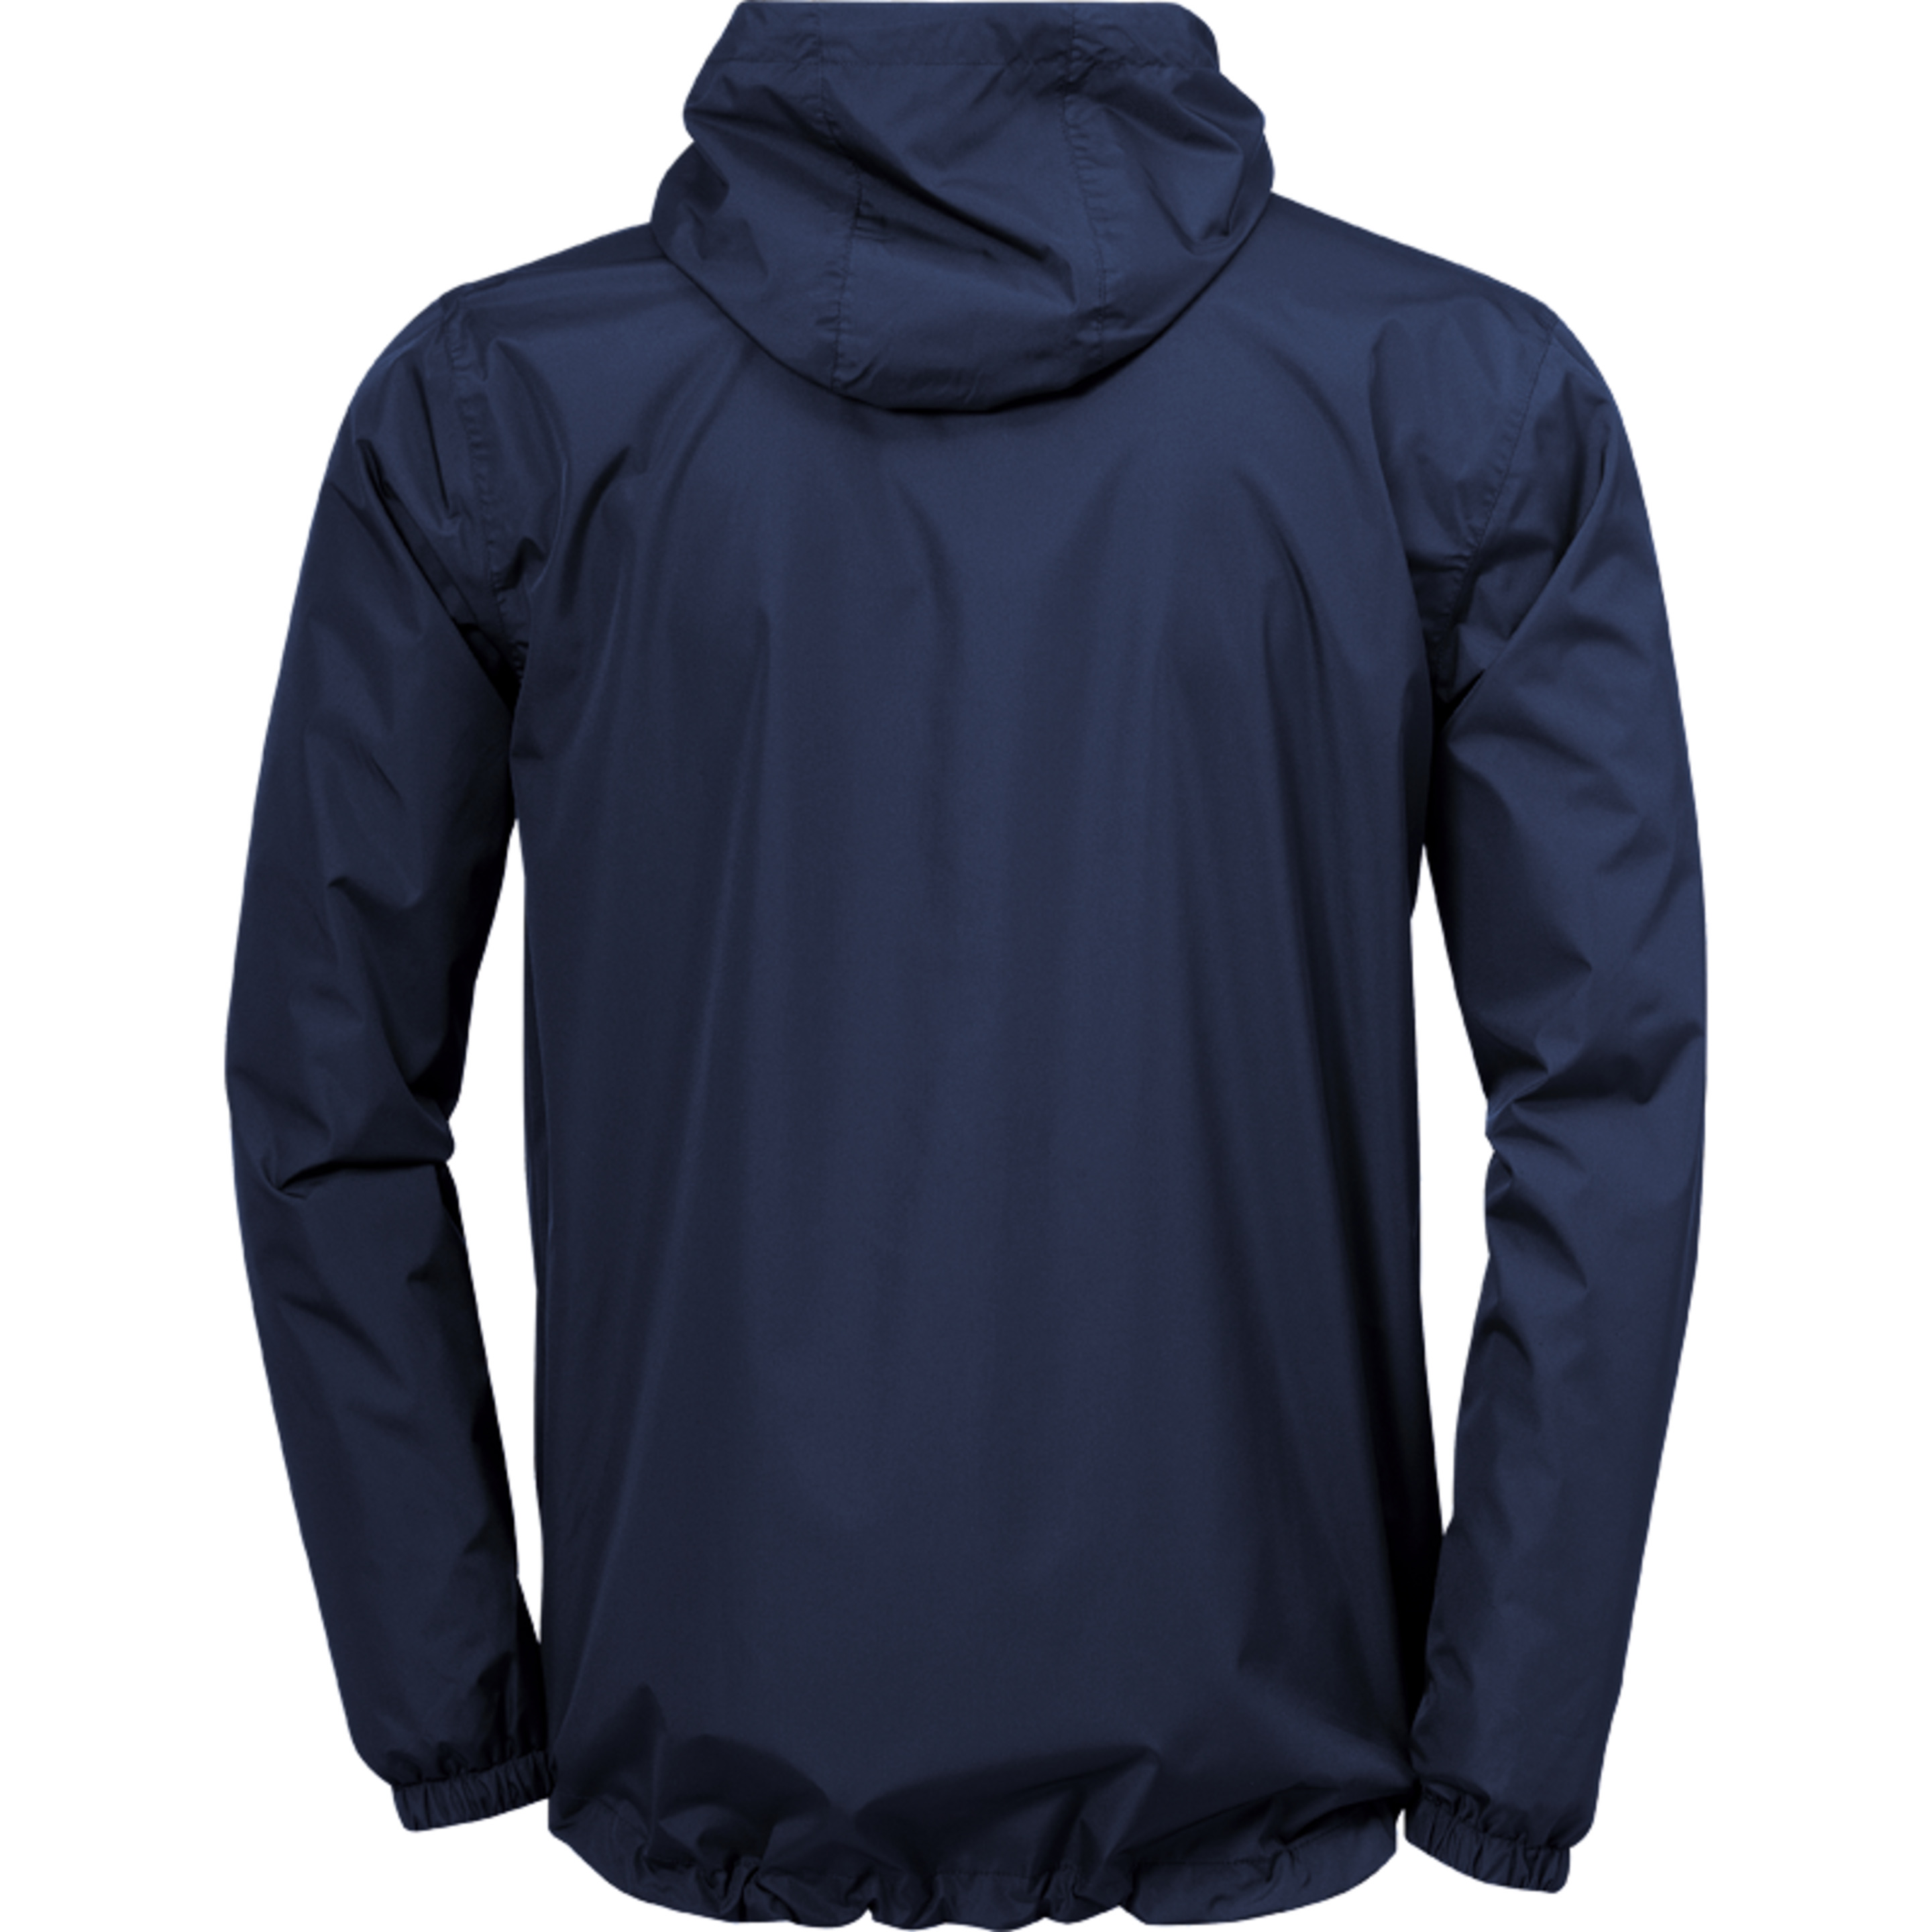 Essential Rain Jacket Azul Marino/blanco Uhlsport